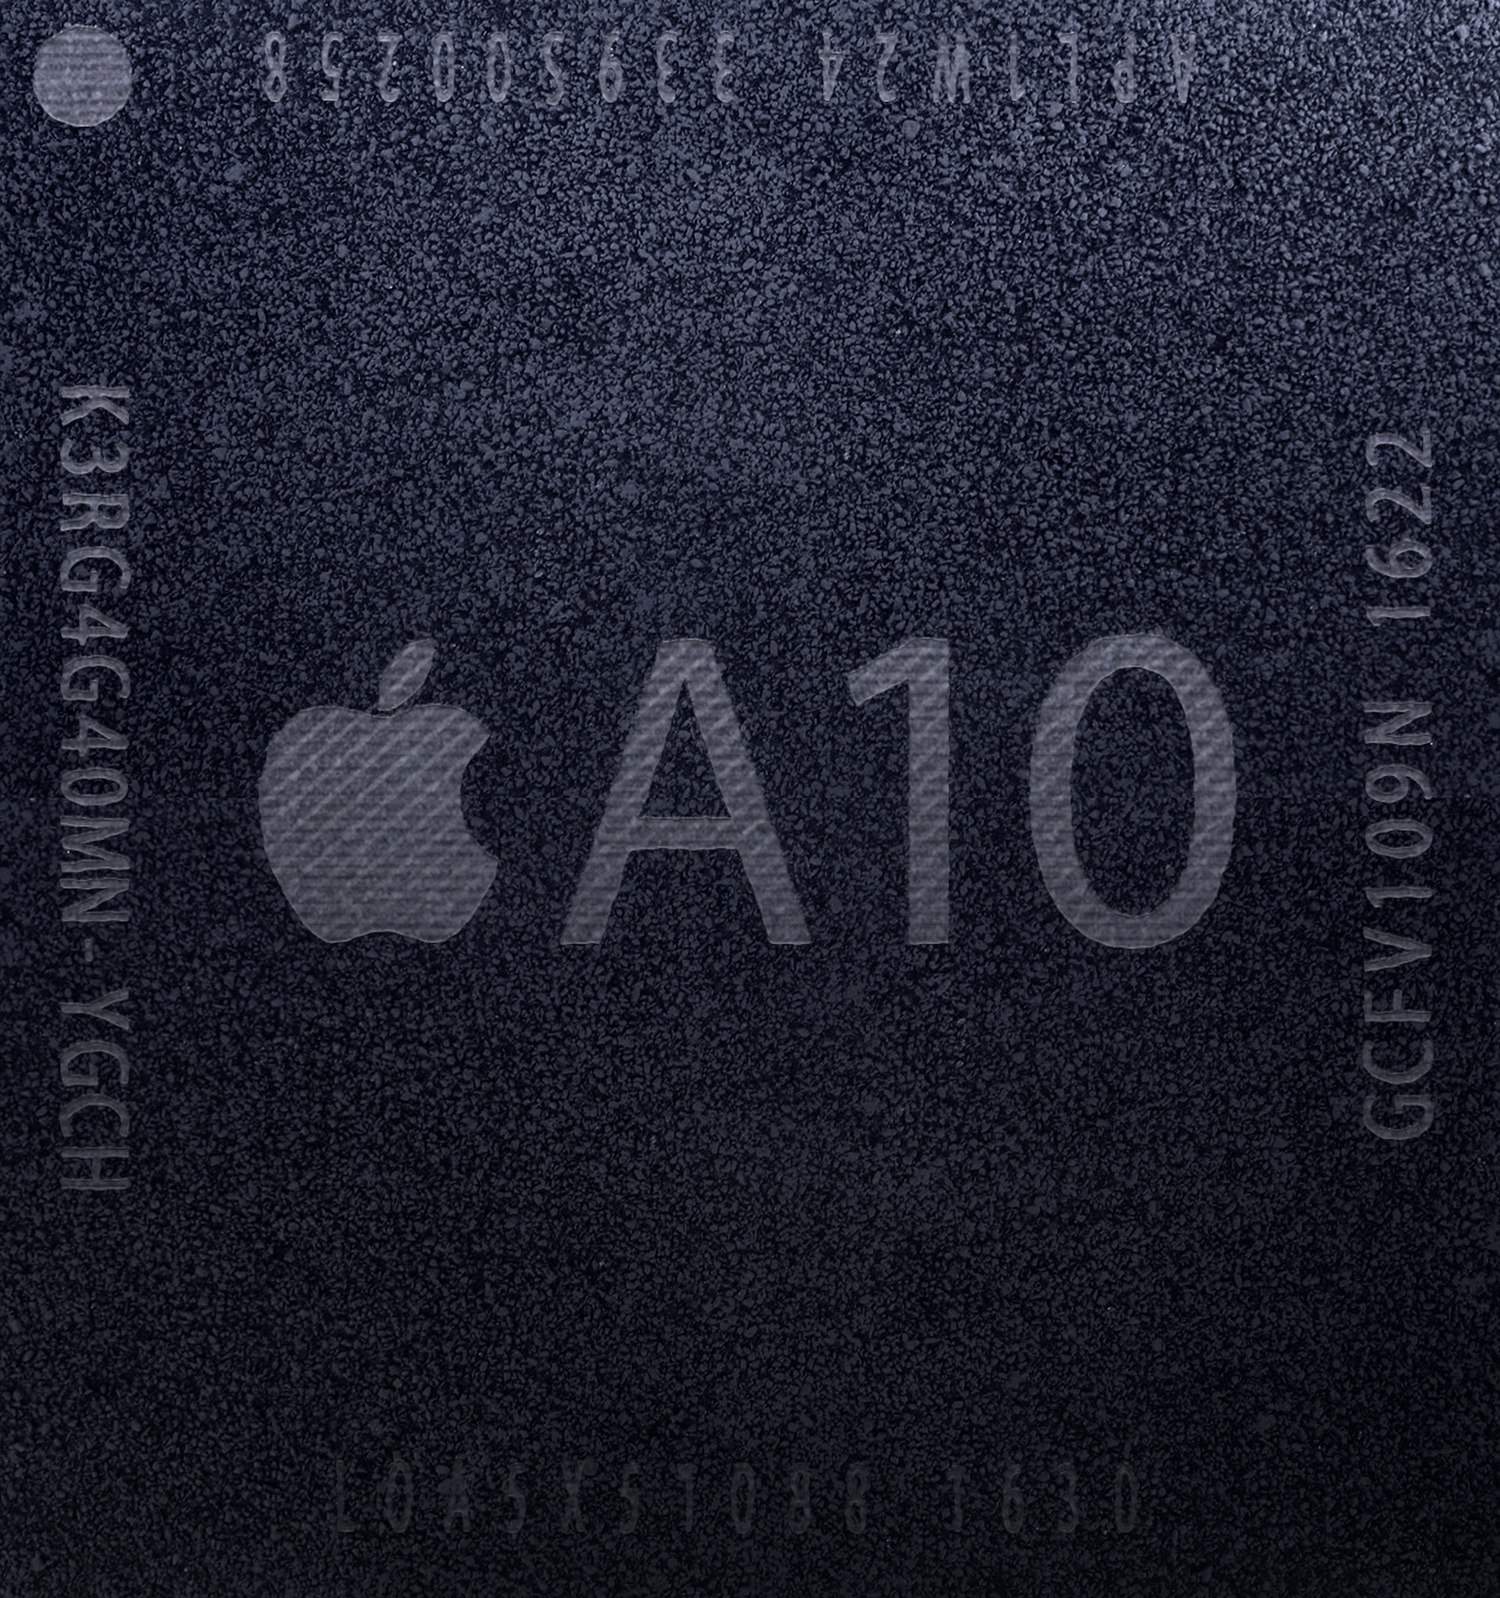 Apple A10 - Wikiwand